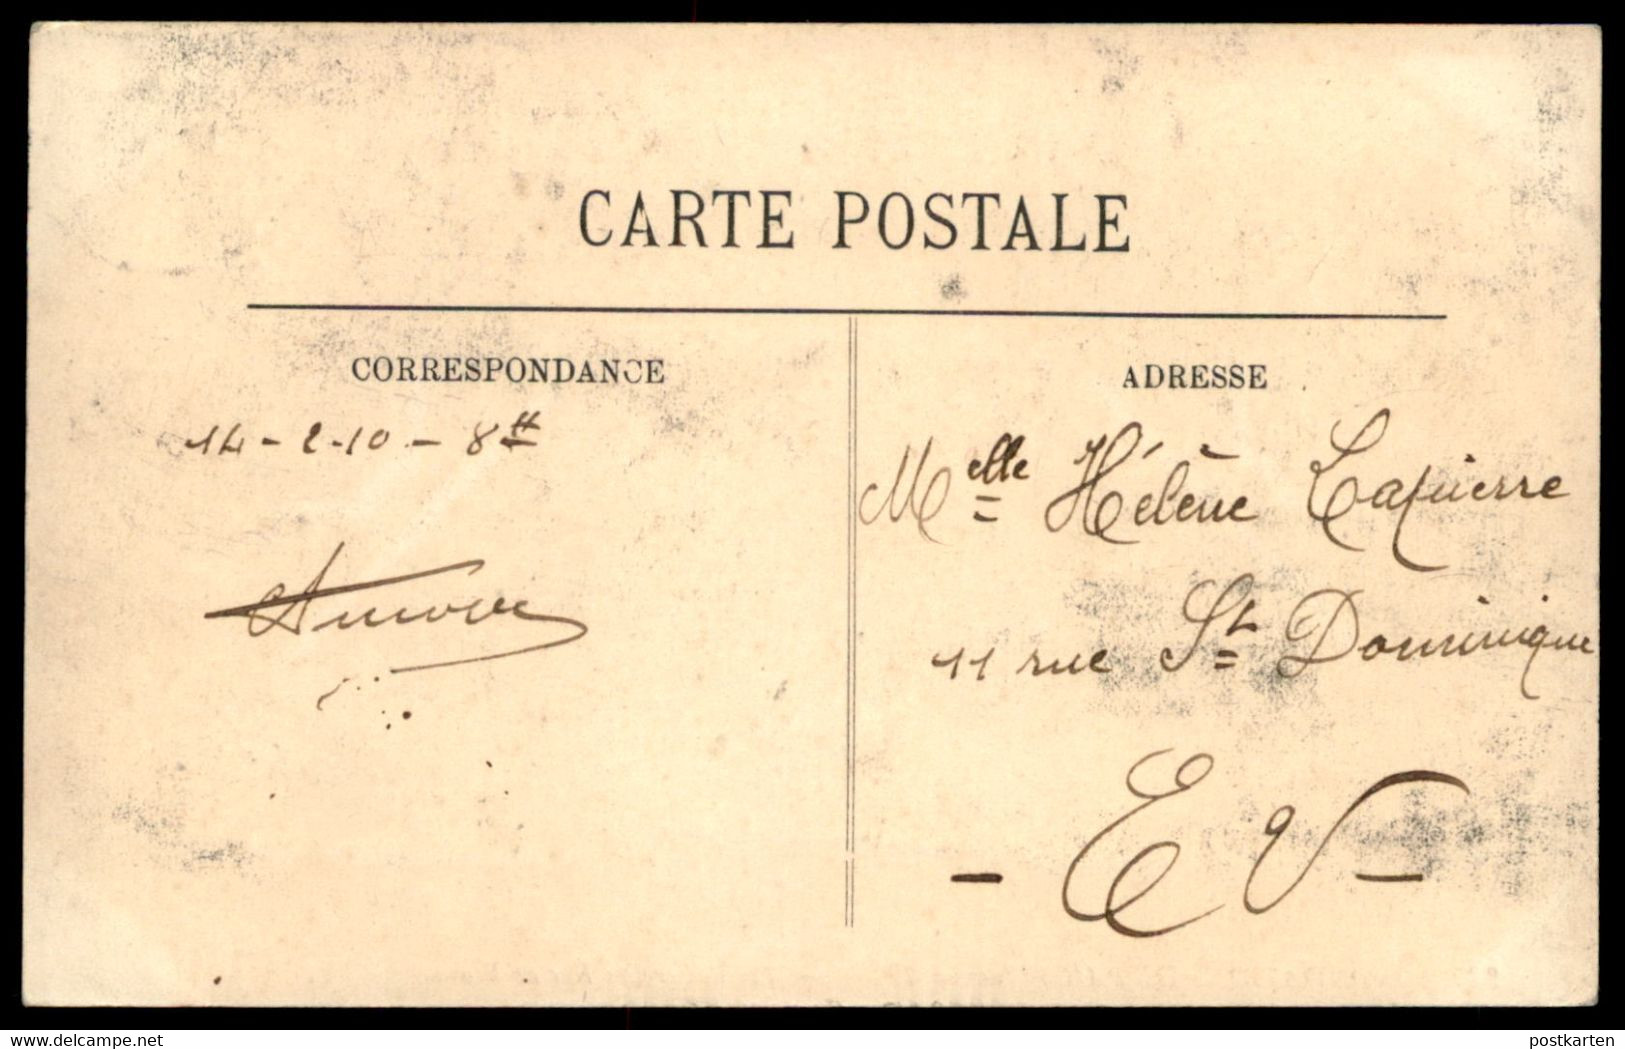 ALTE POSTKARTE PARIS HOCHWASSER 1910 RUE DE BEAUNE Flut Flood Inondations Crue Ansichtskarte Postcard Cpa AK - Floods